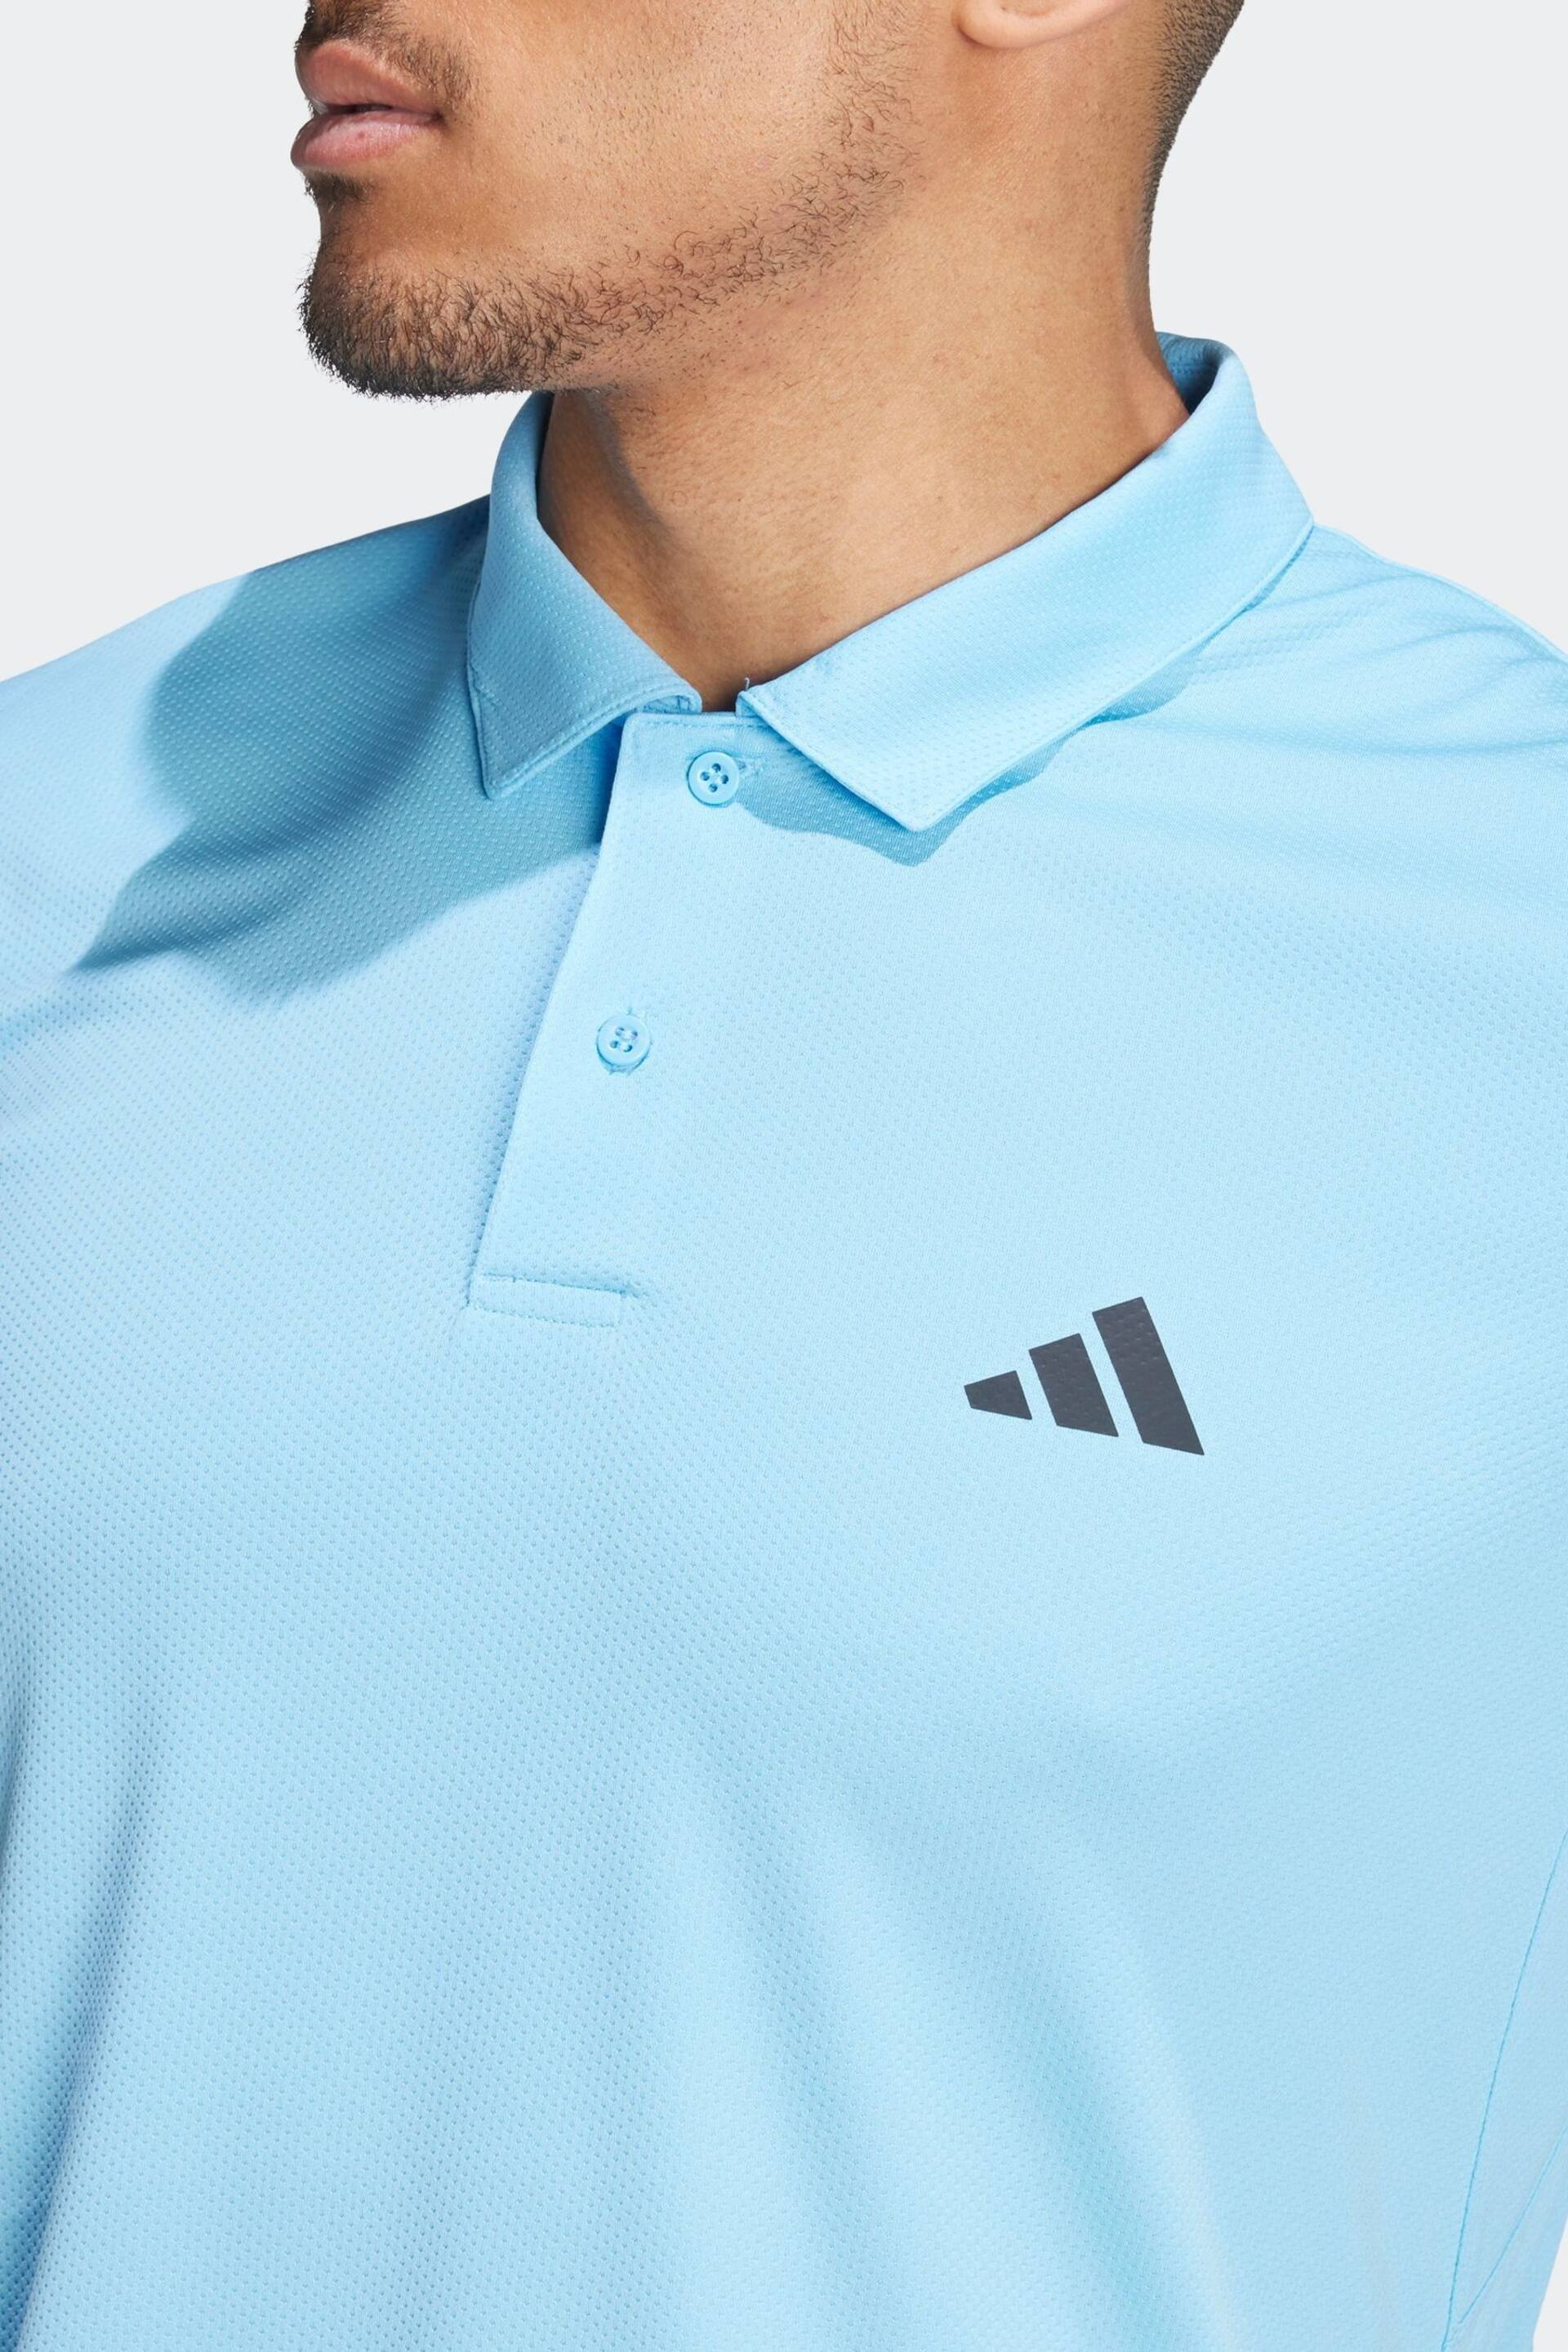 adidas Light Blue Train Essentials Training Polo Shirt - Image 5 of 7